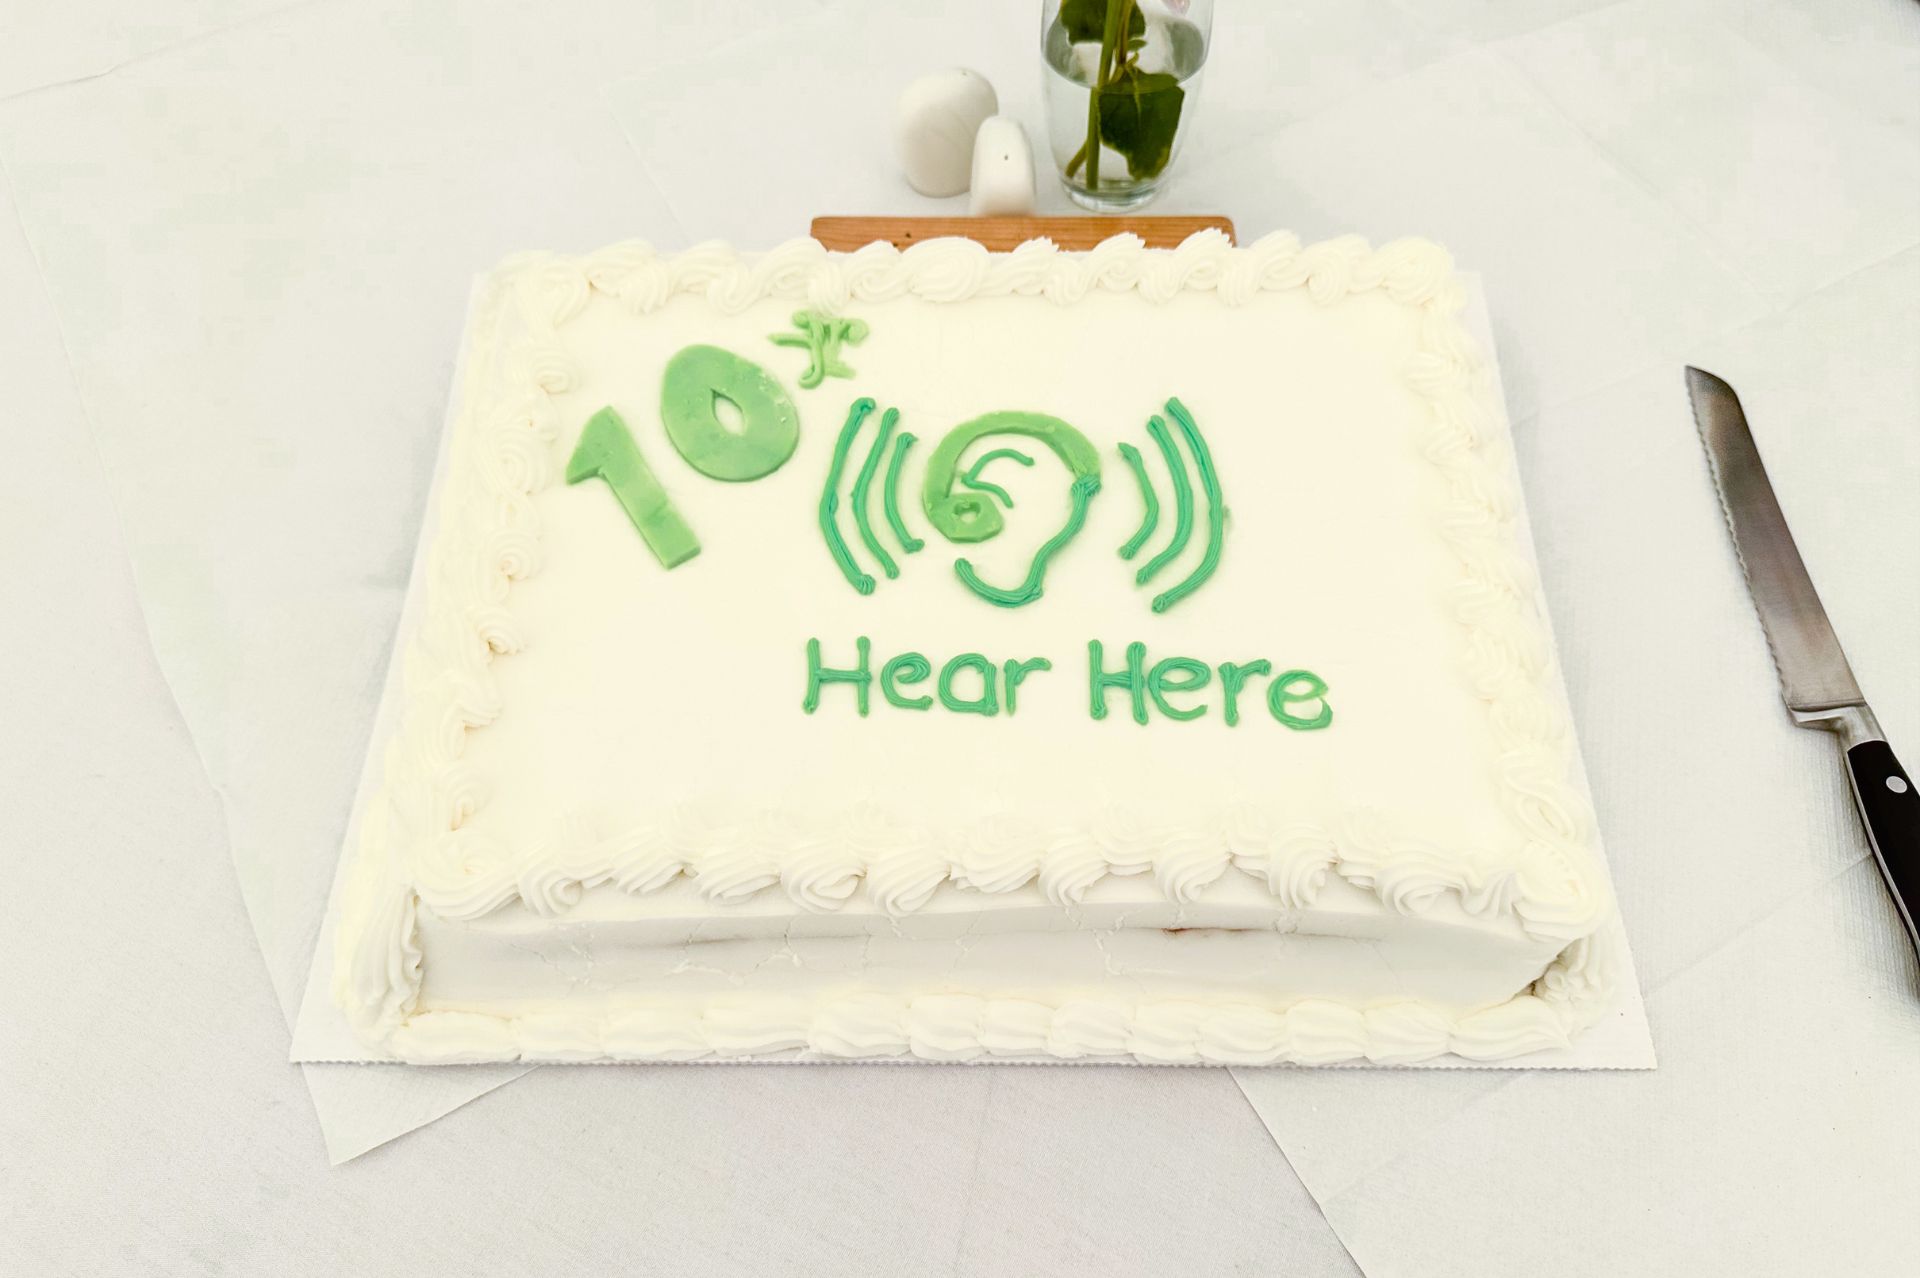 A cake celebrating Hear Here's 10th anniversary 